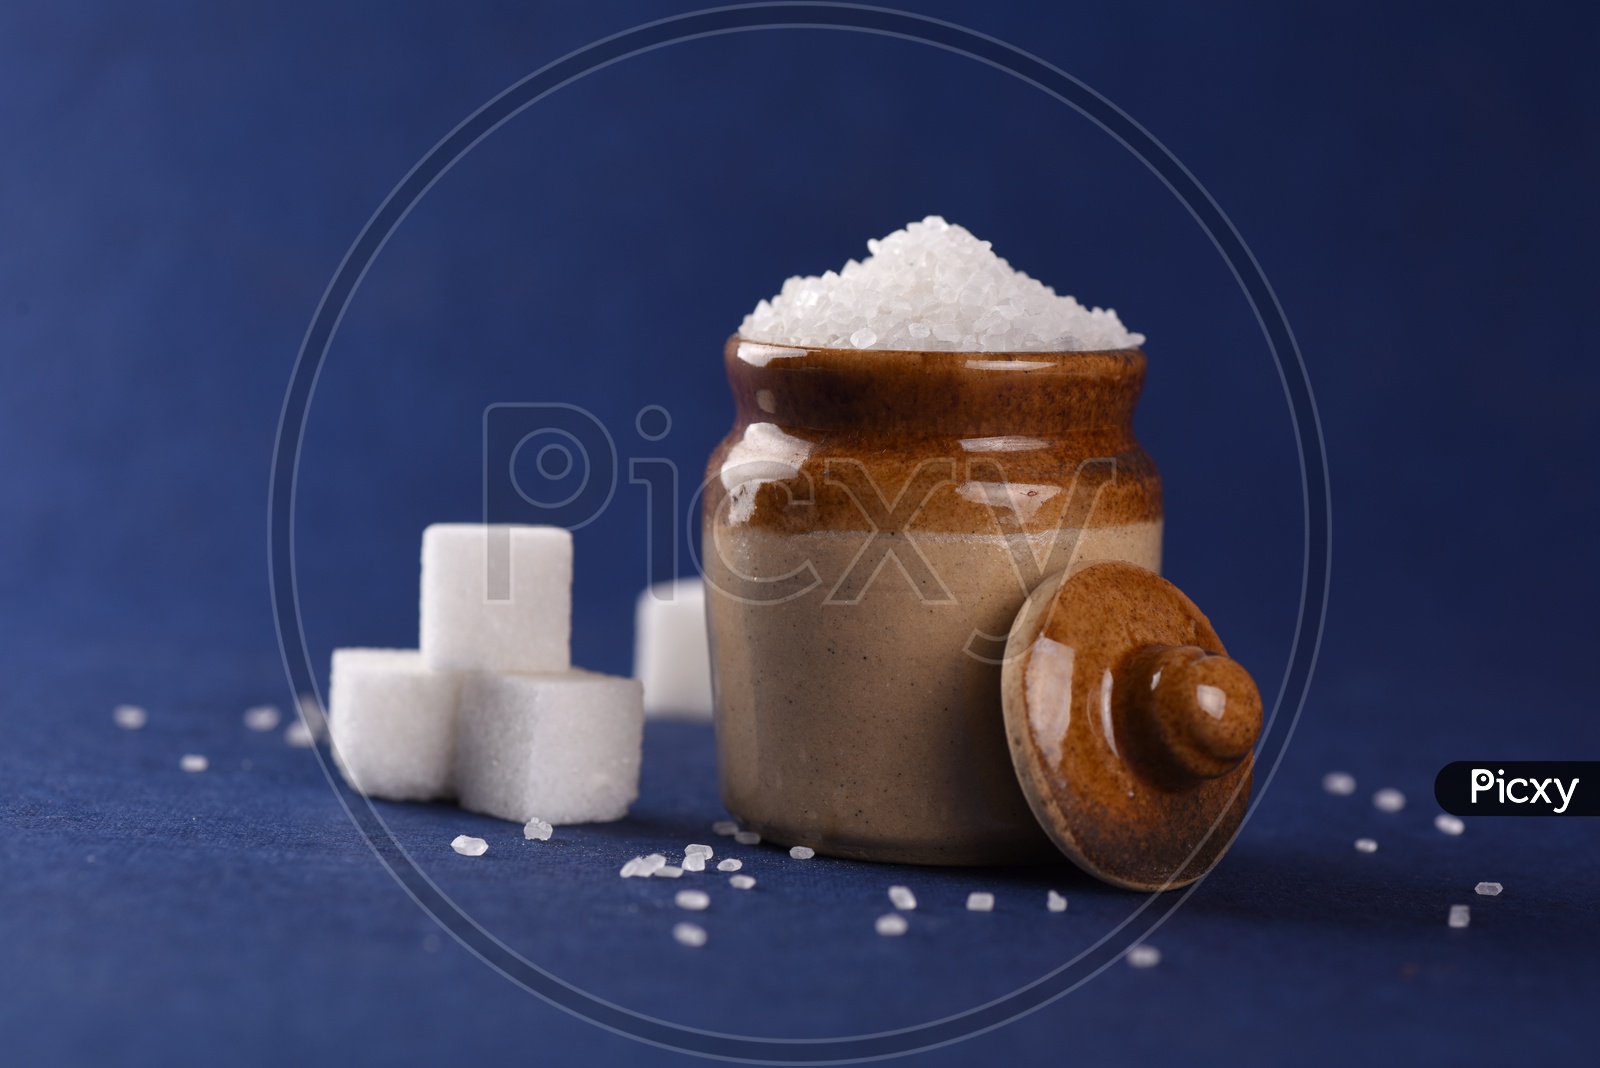 Sugar cubes and granulated sugar in a ceramic jar on dark blue background